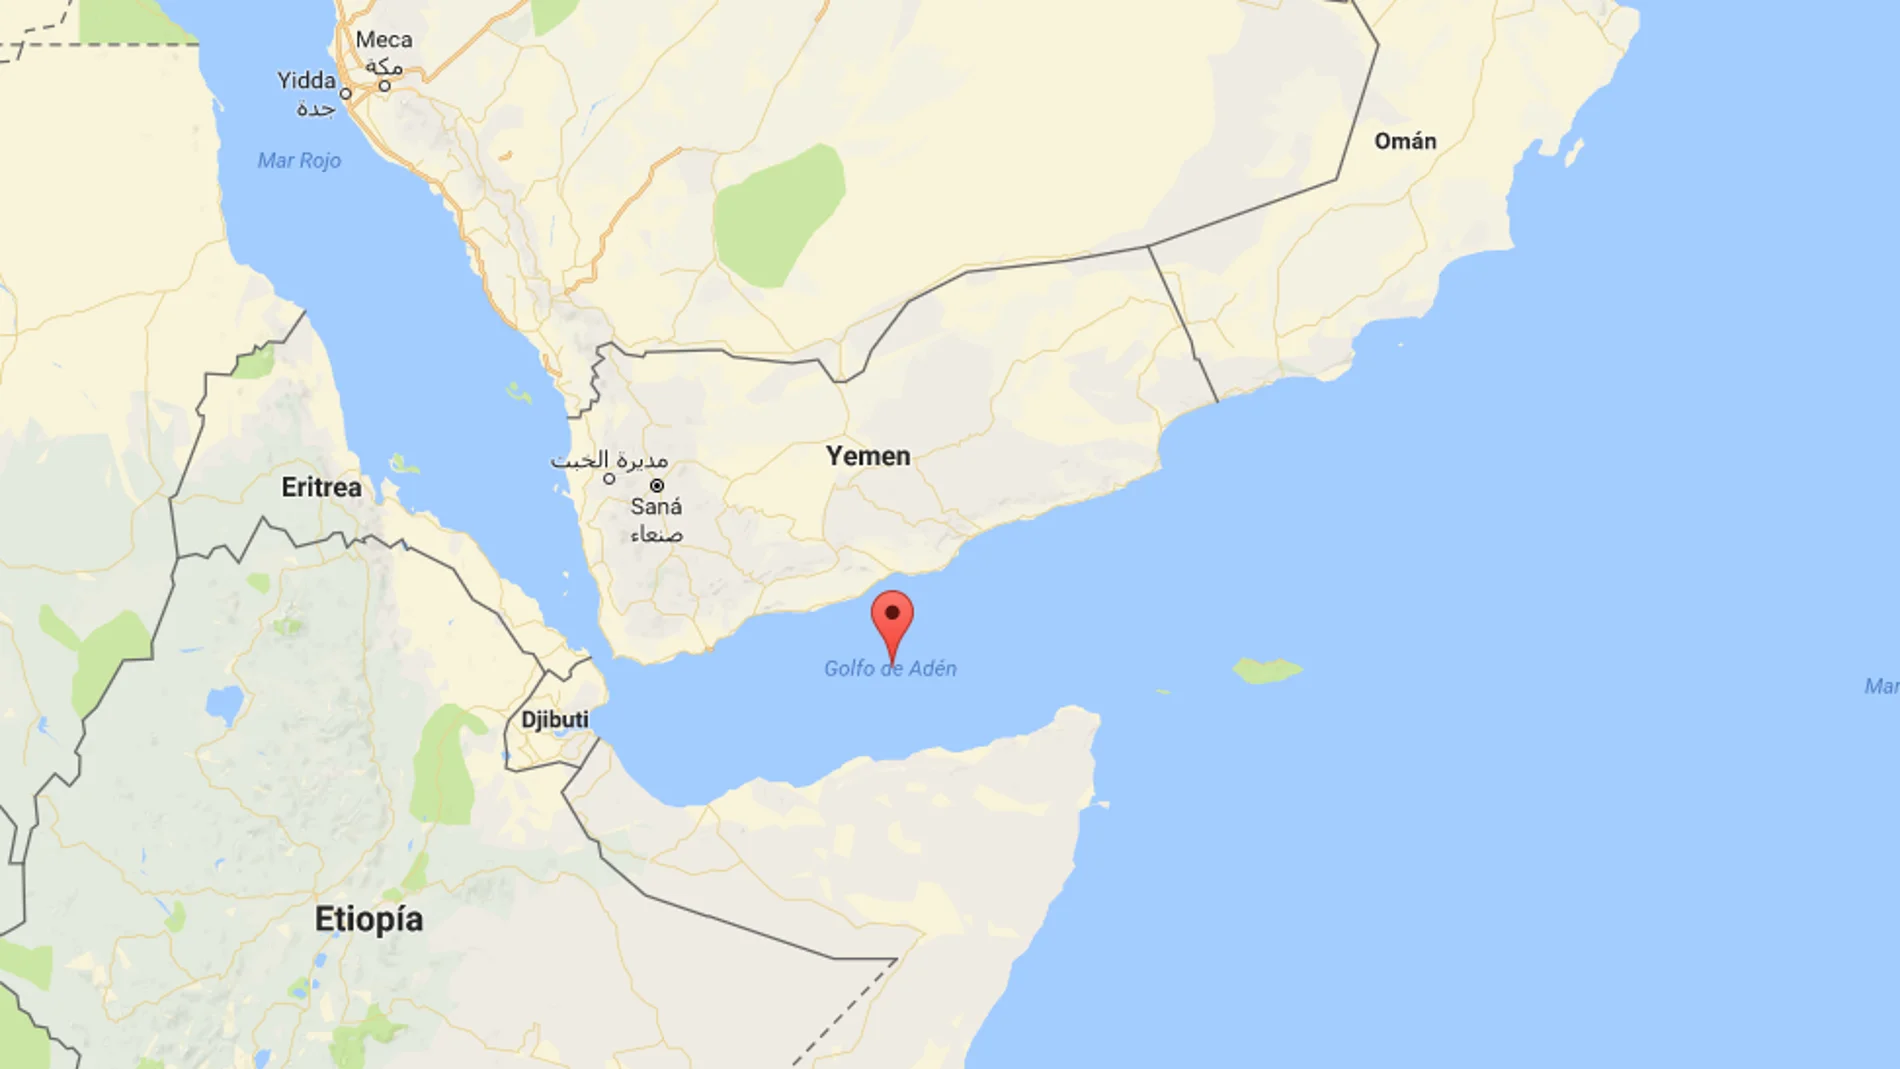  Un crucero de lujo con casi 2.000 pasajeros pasa 10 días con las luces apagadas ante la amenaza de ataques piratas somalíes  